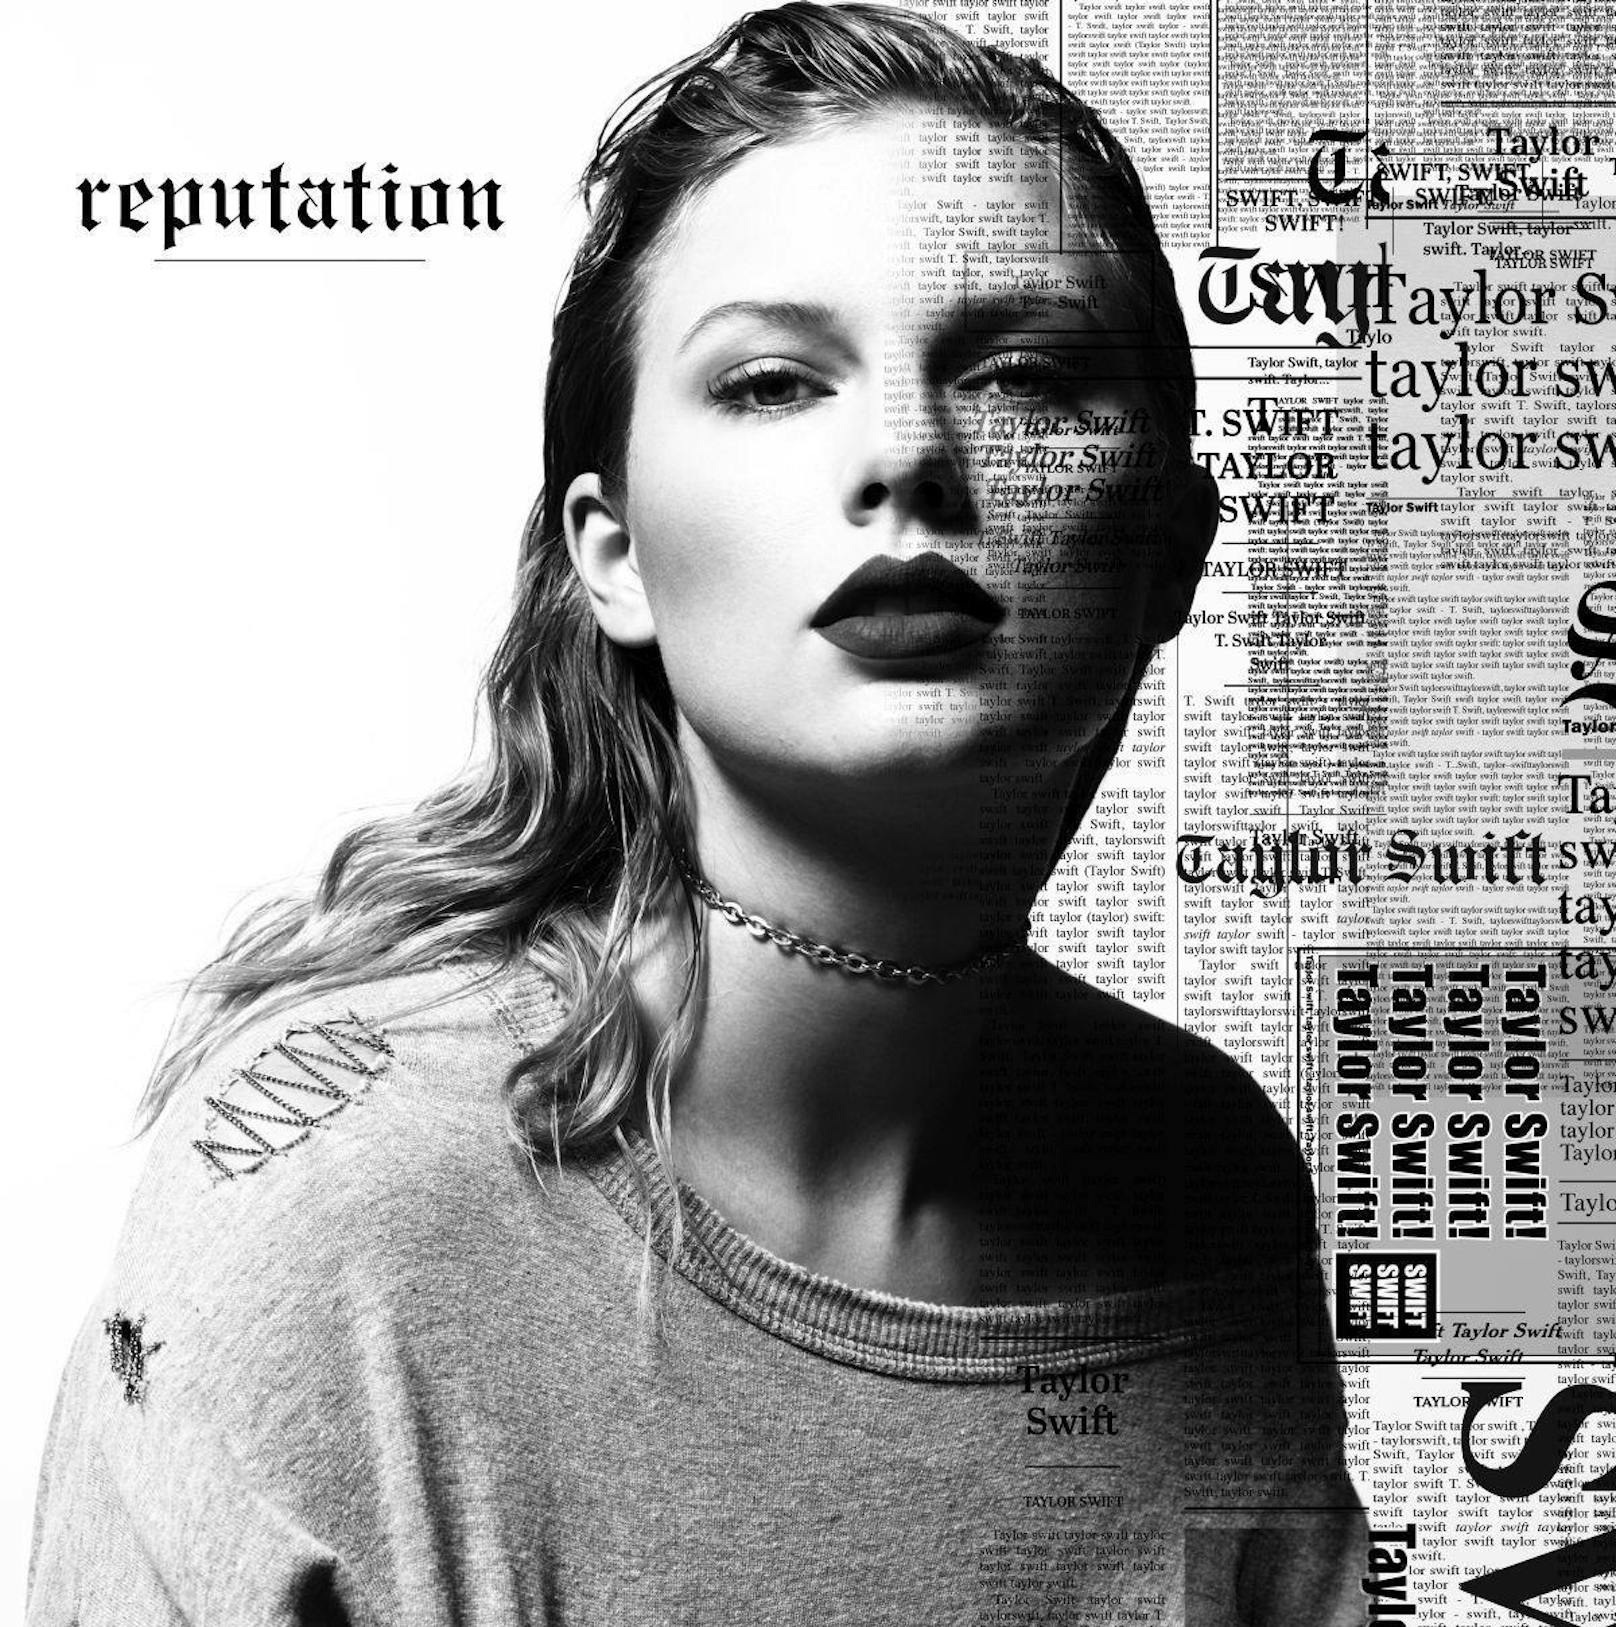 Taylor Swift "Reputation"